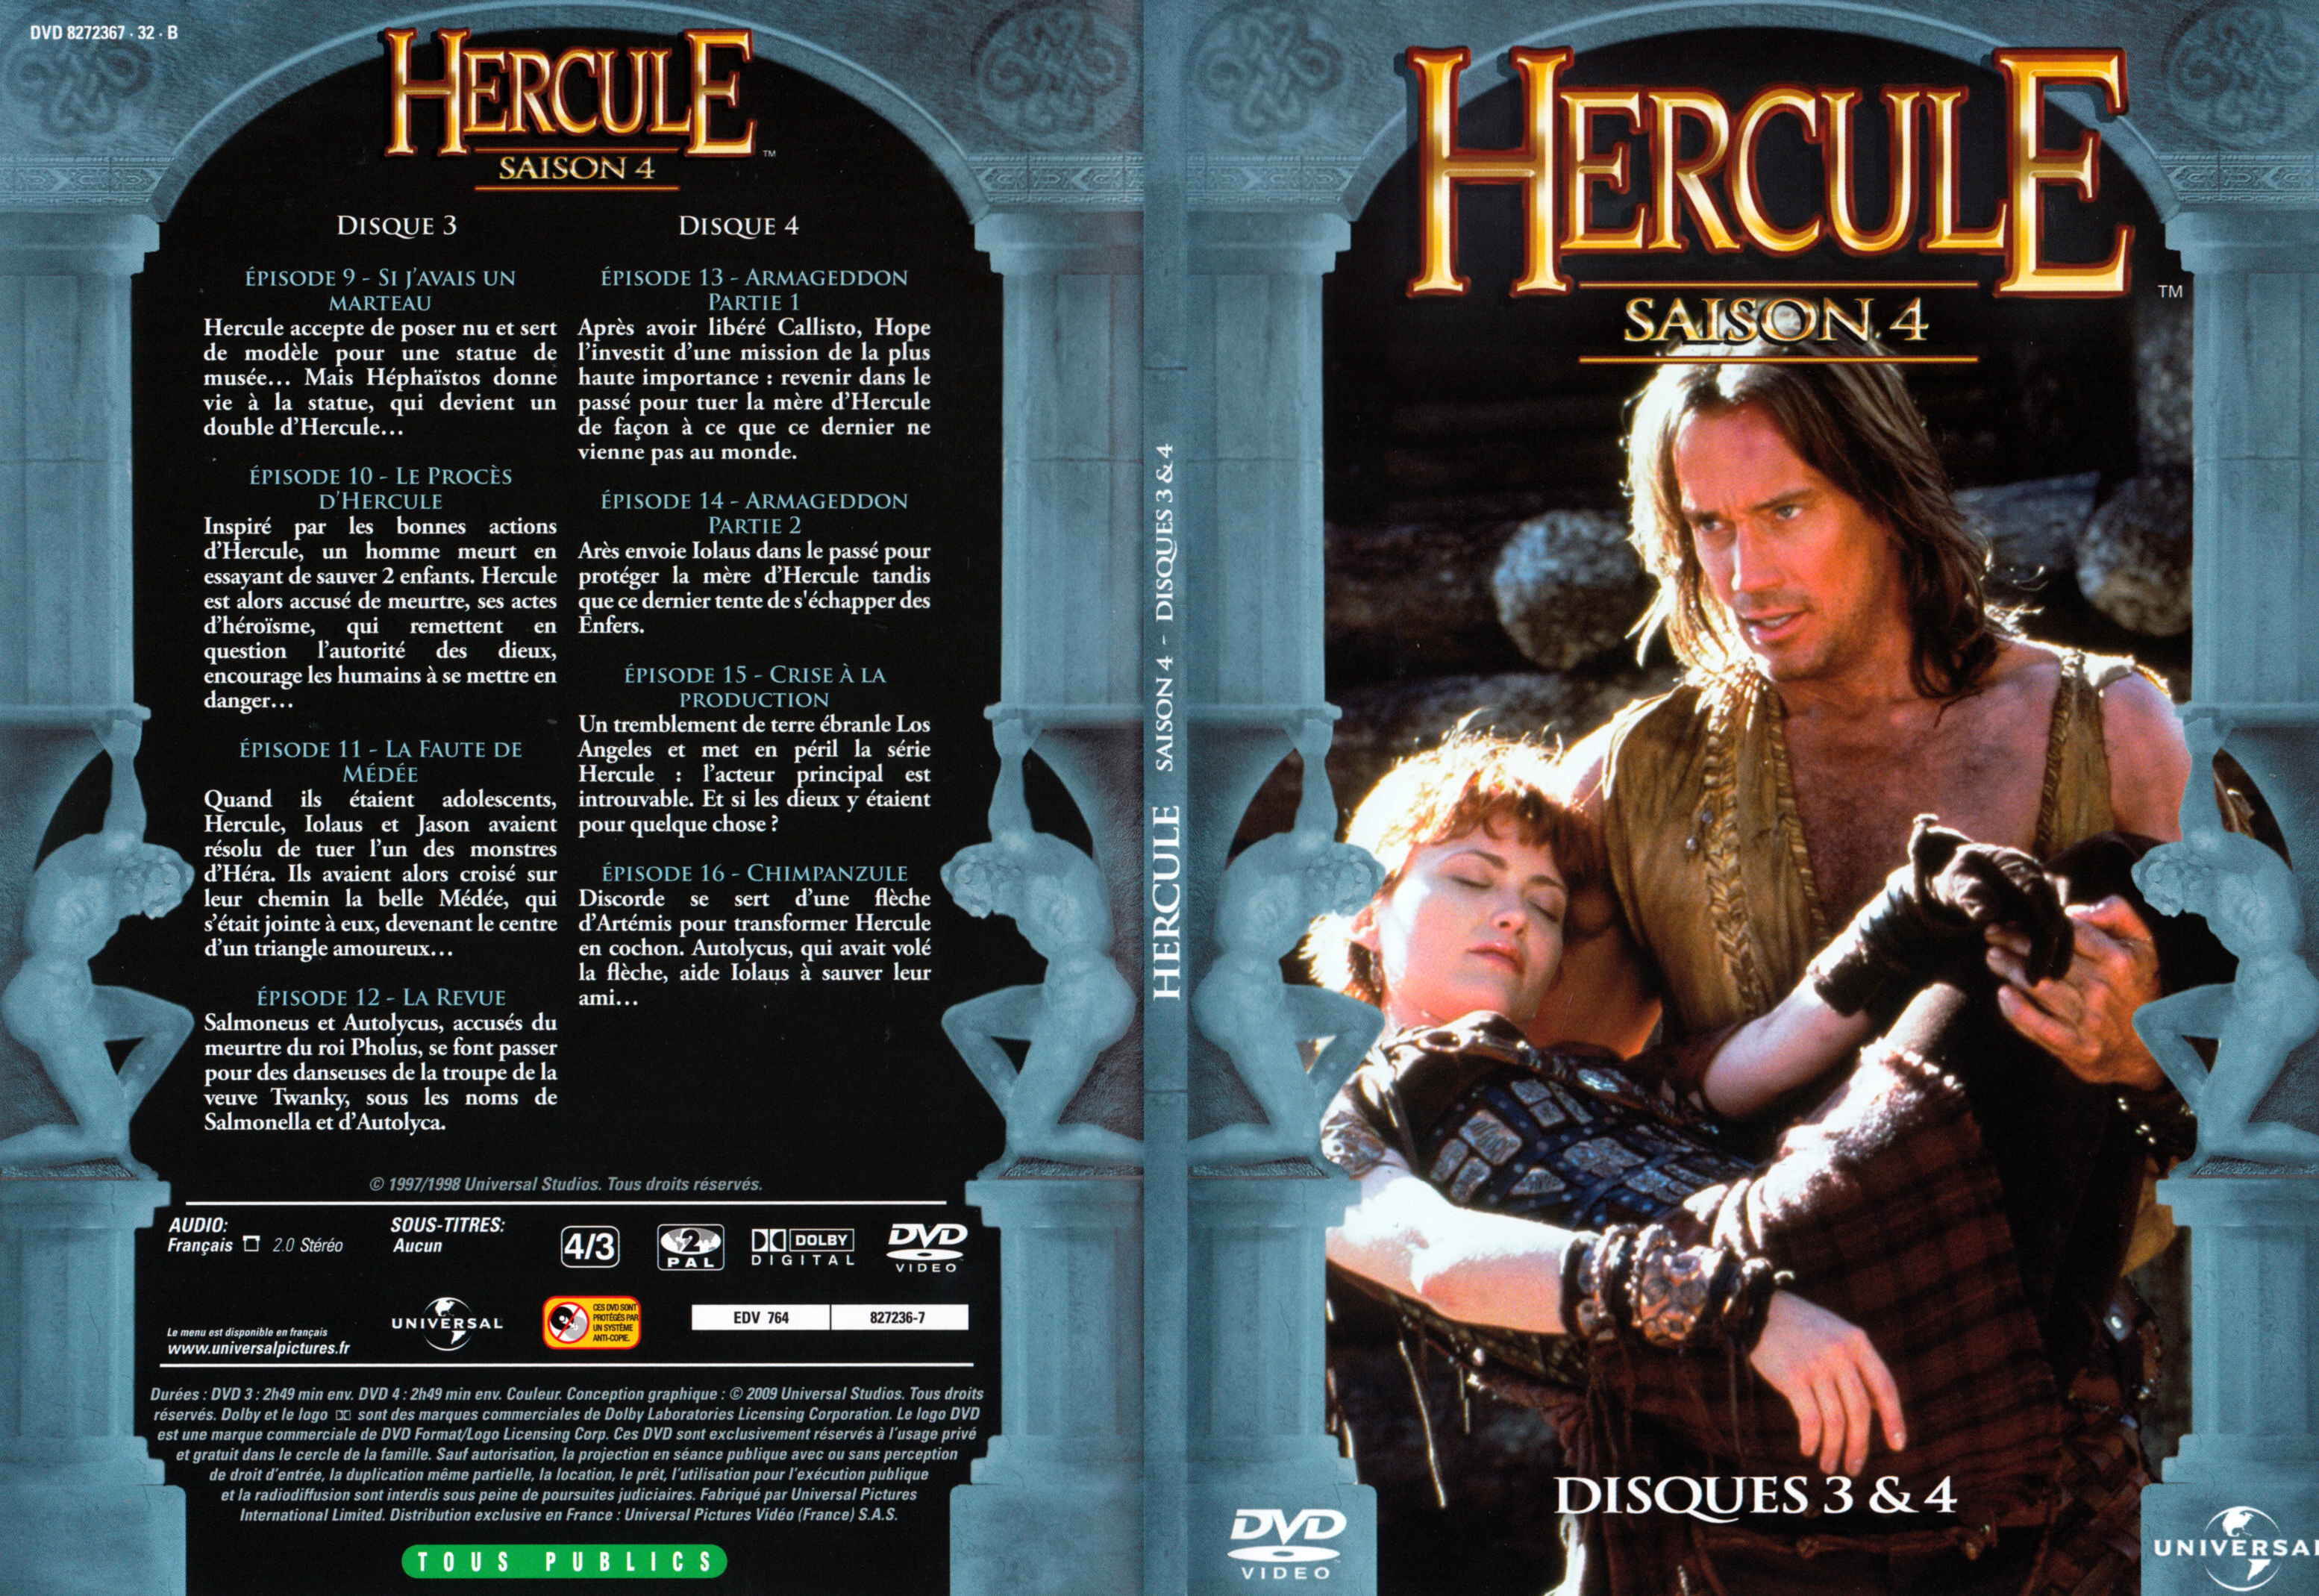 Jaquette DVD Hercule Saison 4 DVD 2